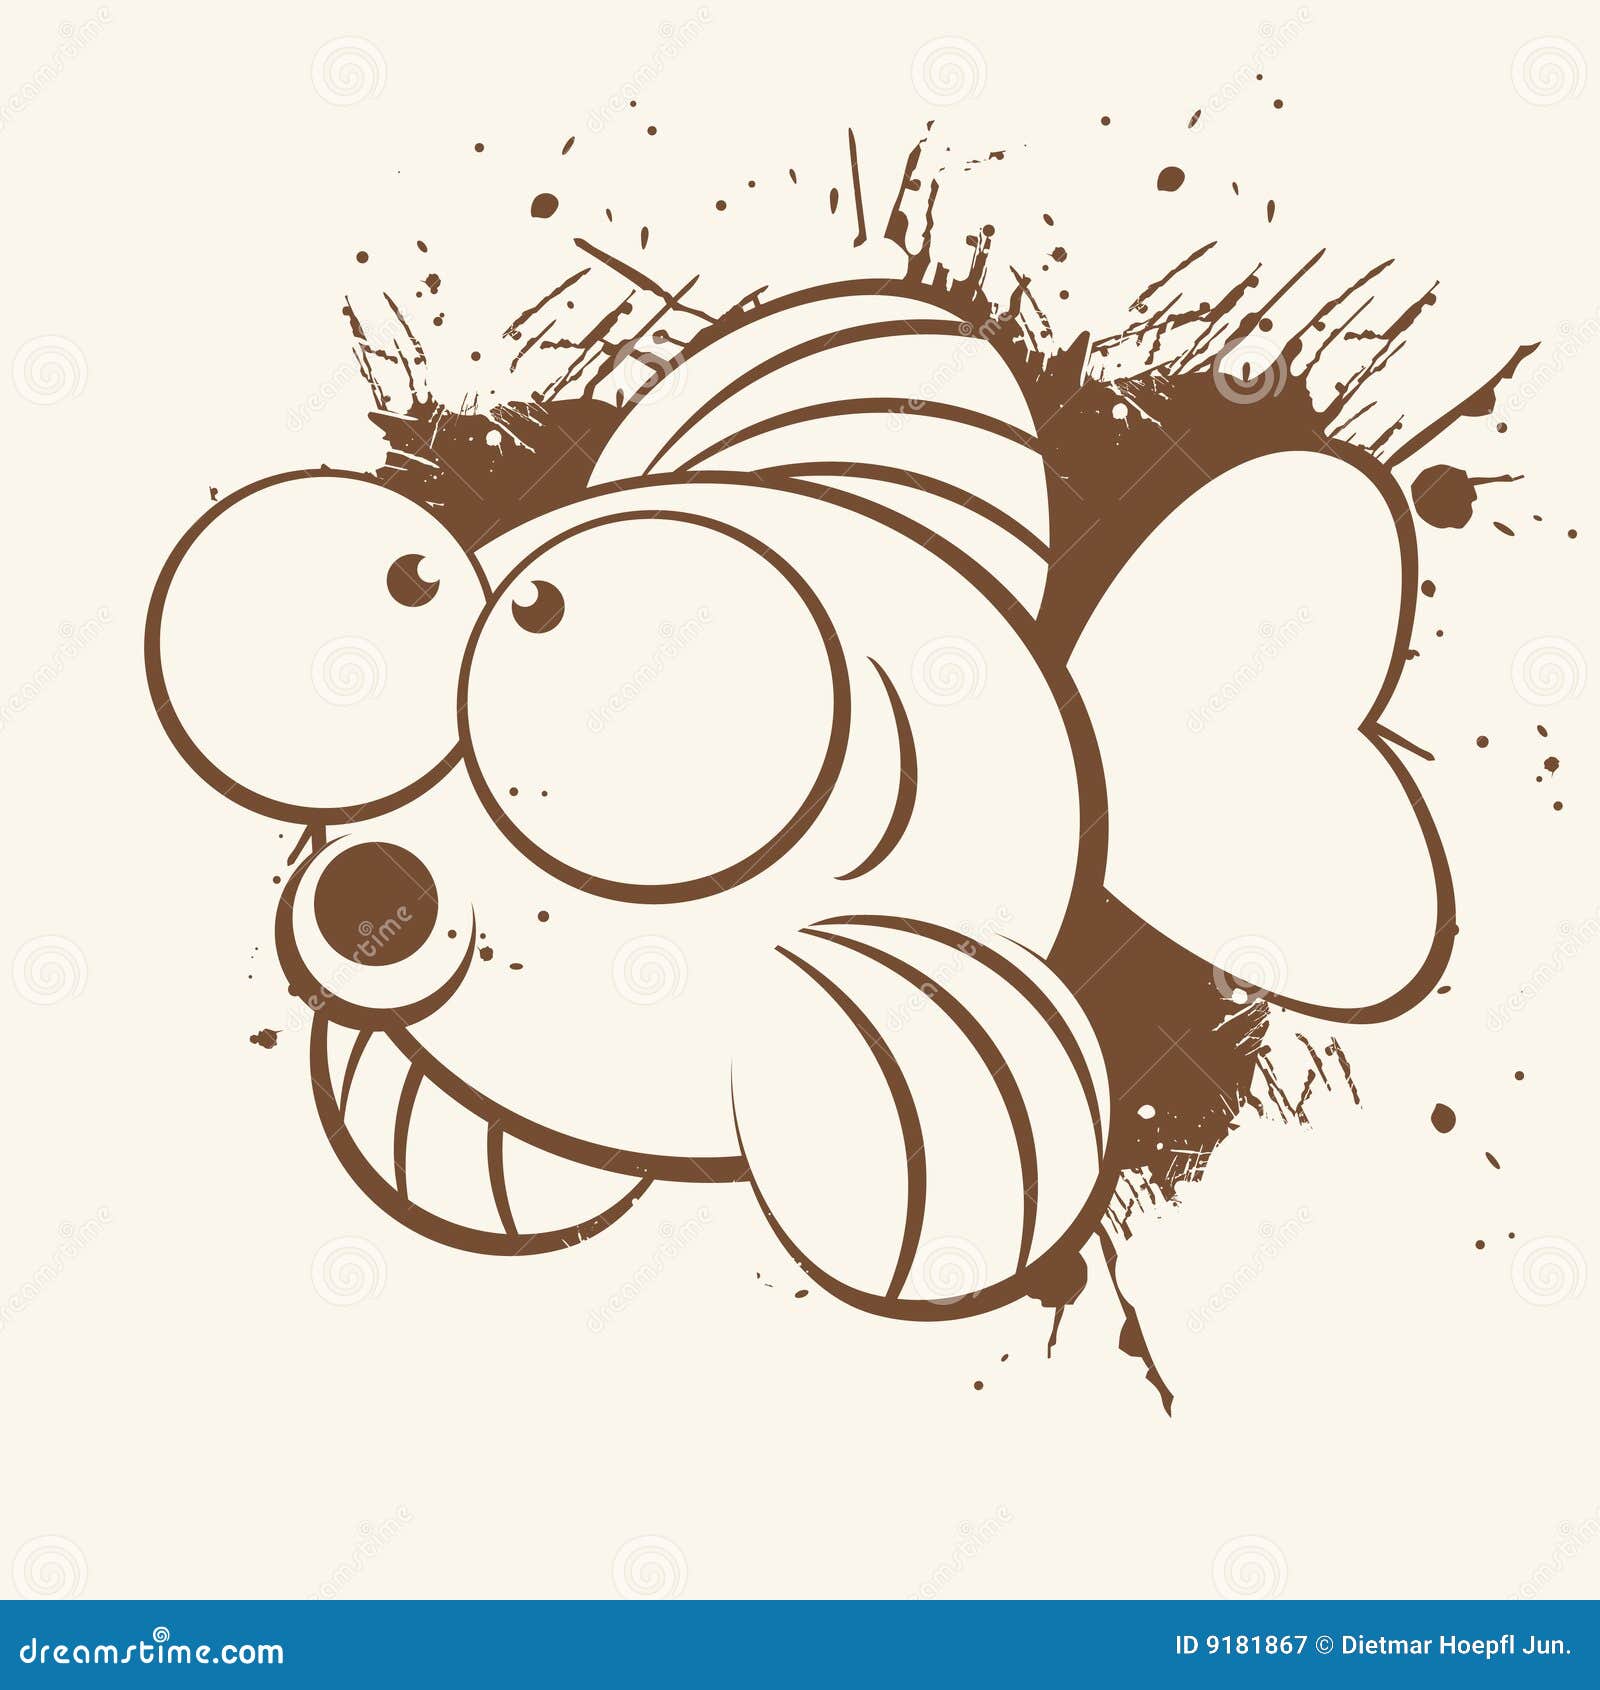 Cartoon fish, Fish illustration, Easy drawings